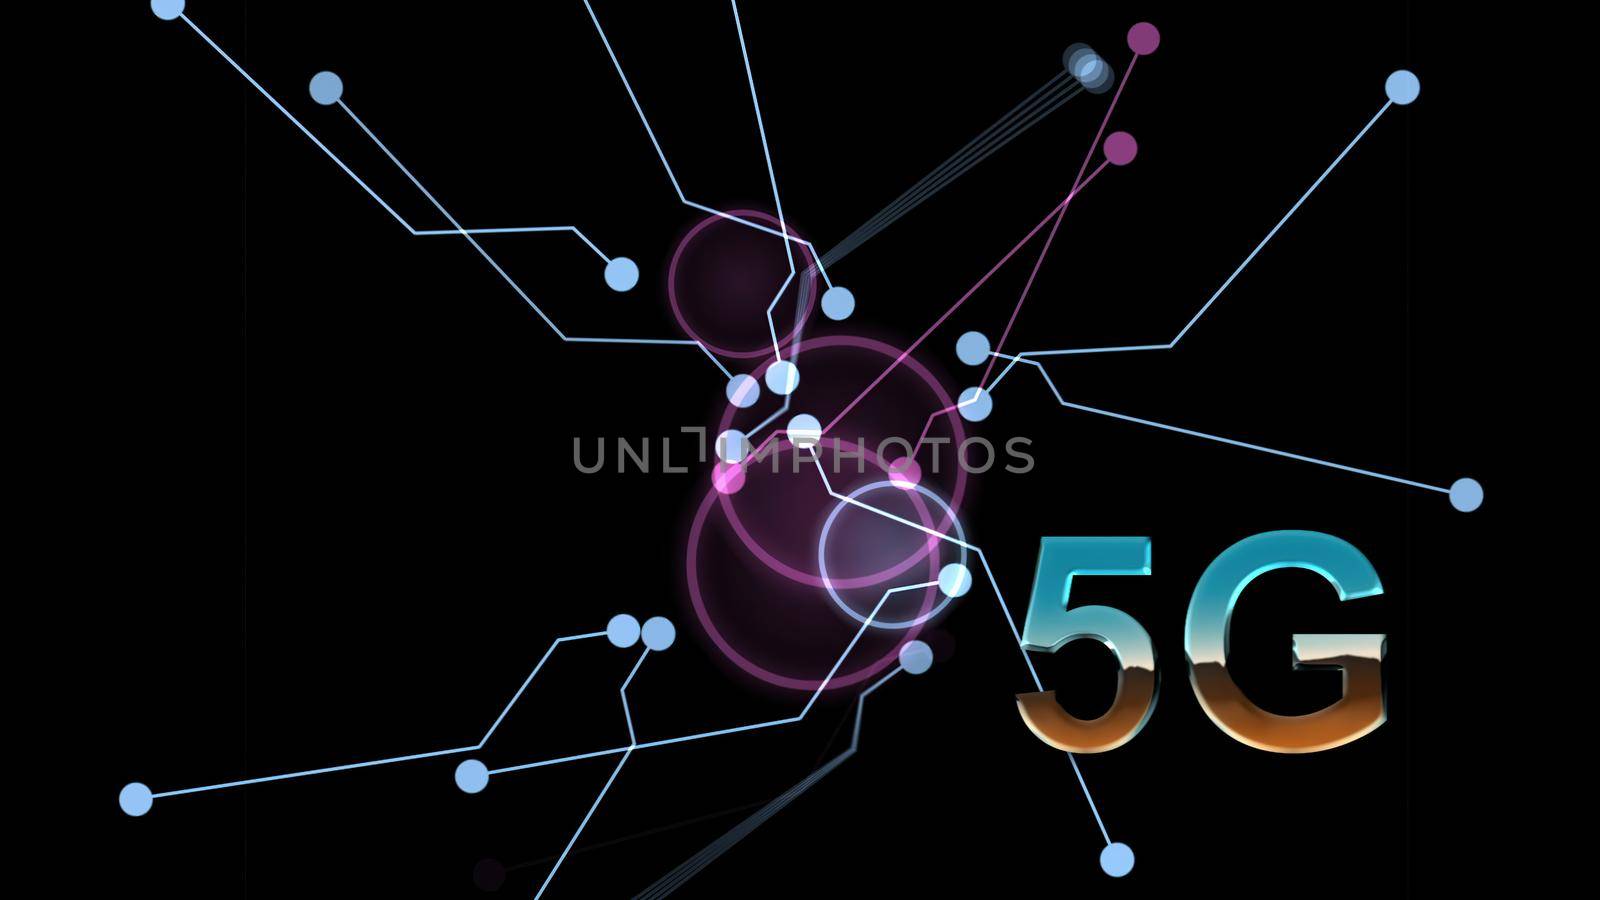 3d illustration - 5G technology with futuristic HUD interface by vitanovski